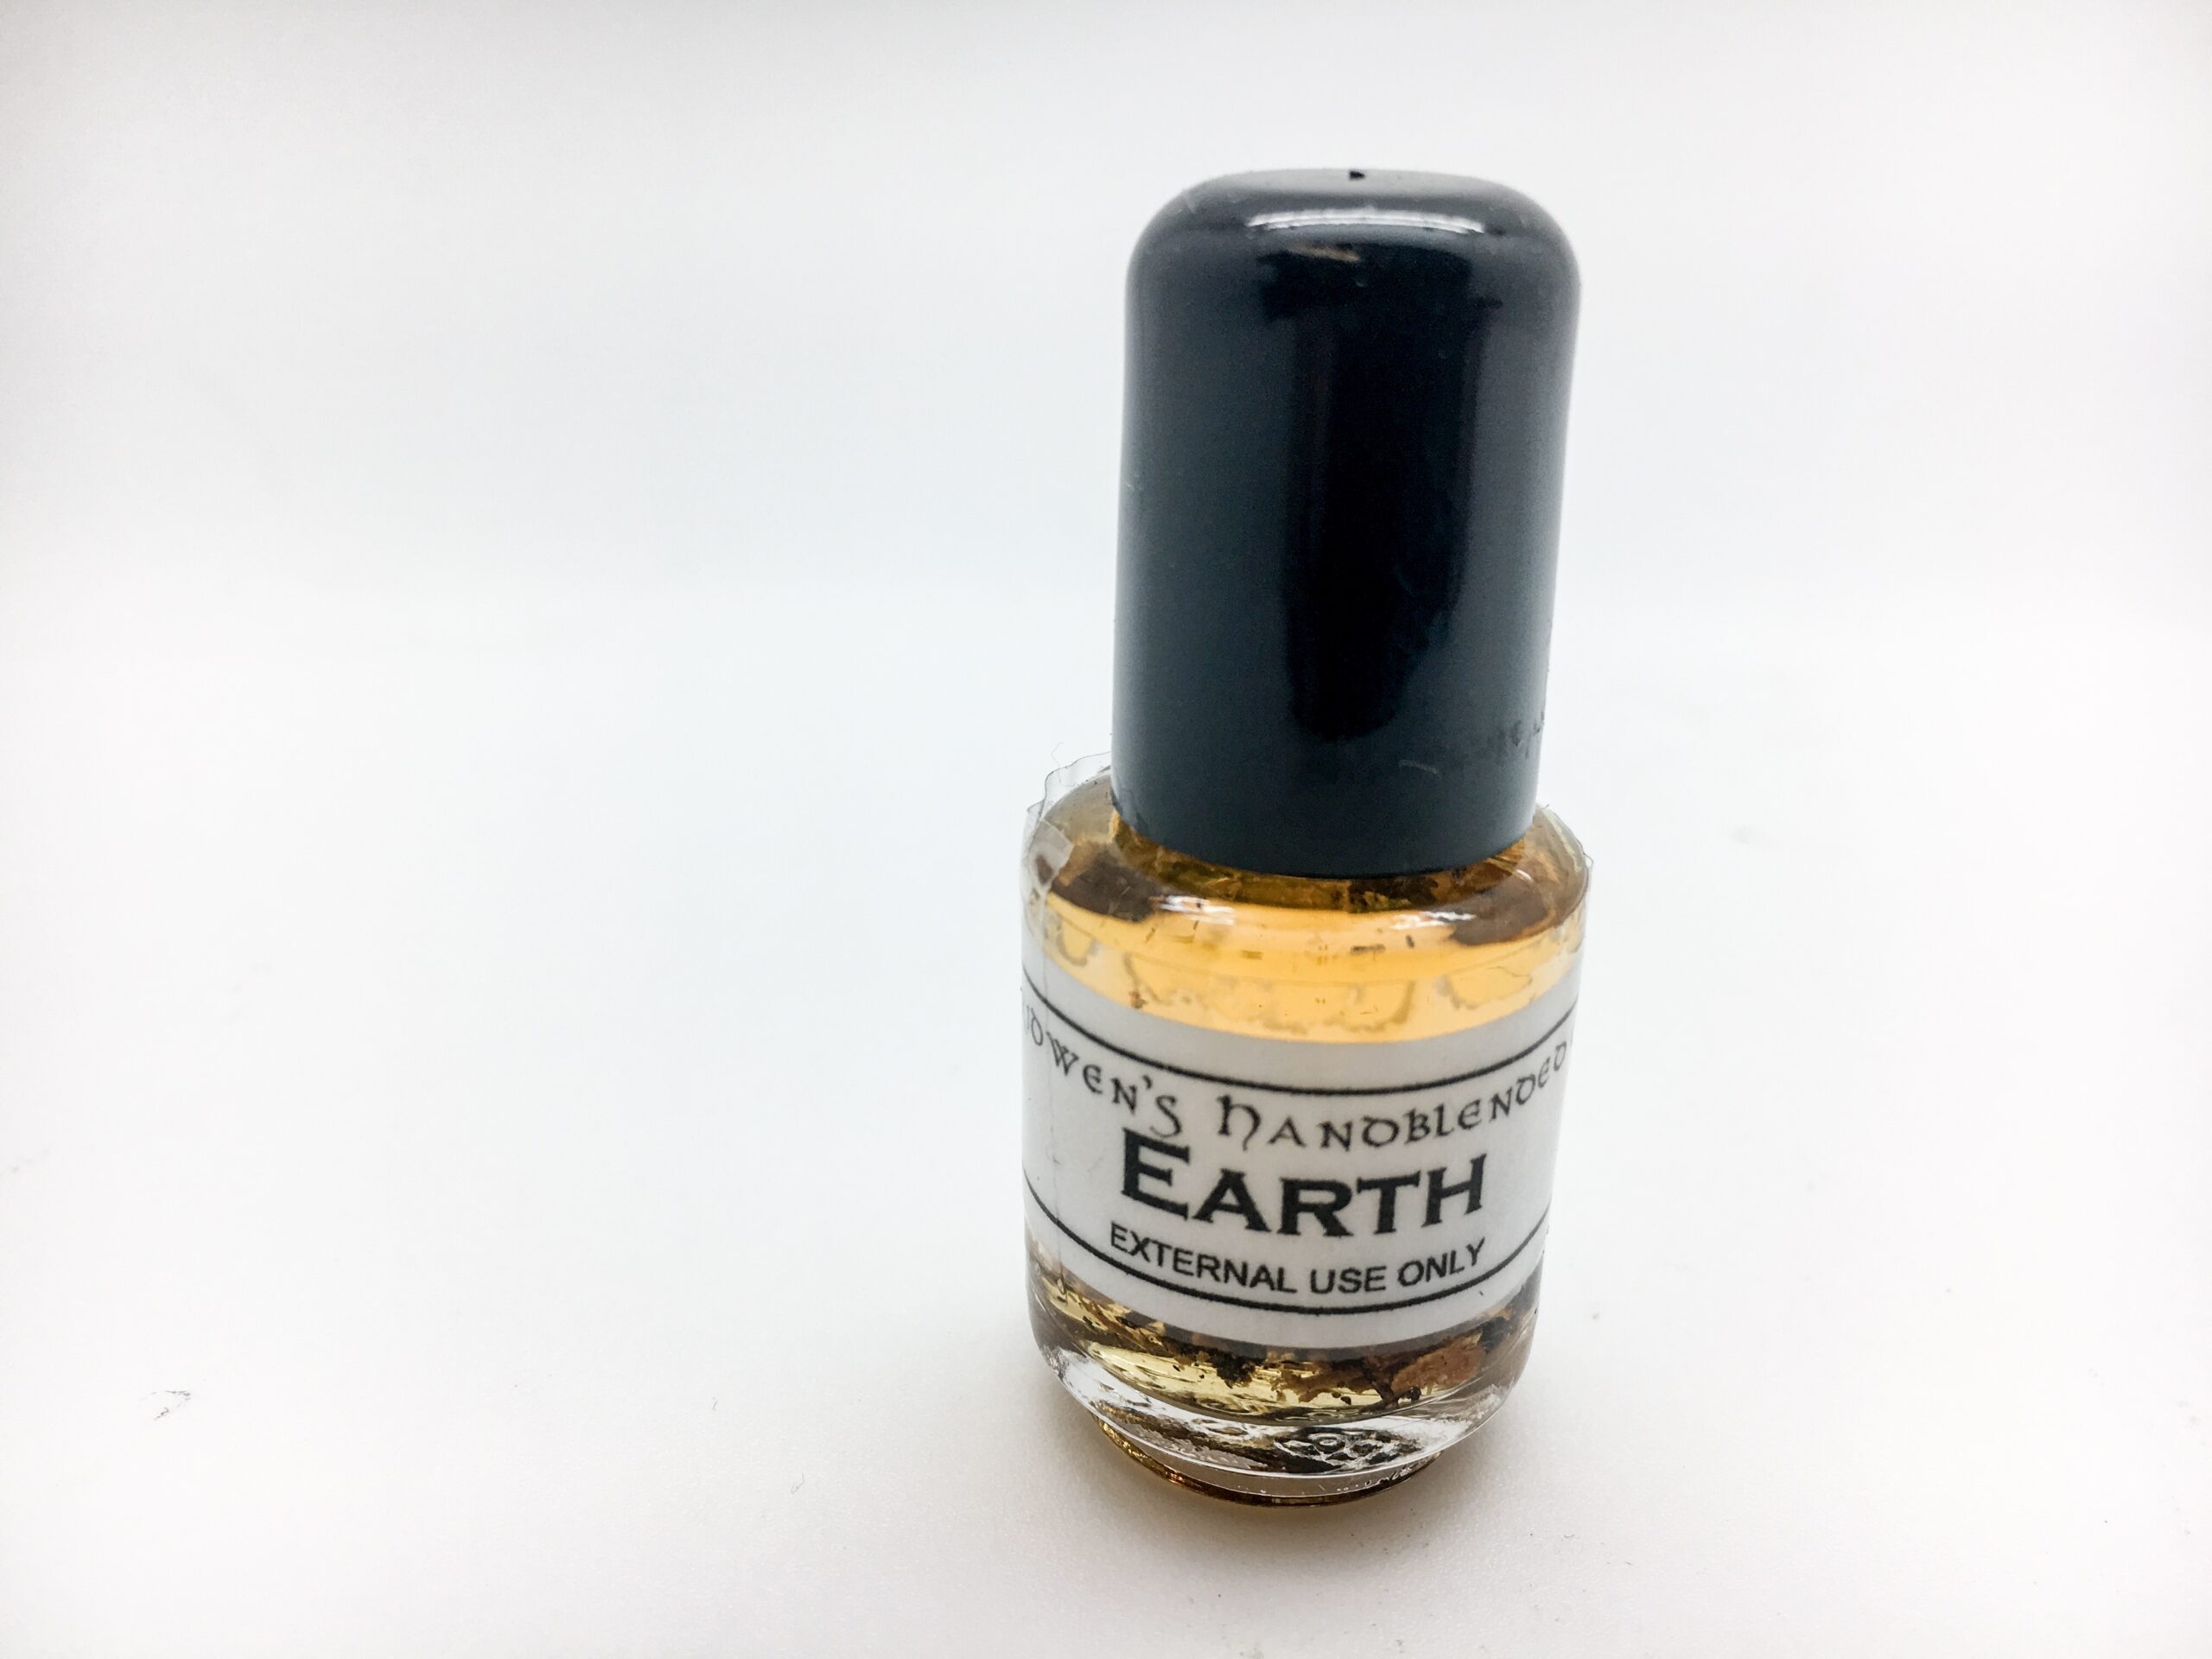 Earth Oil